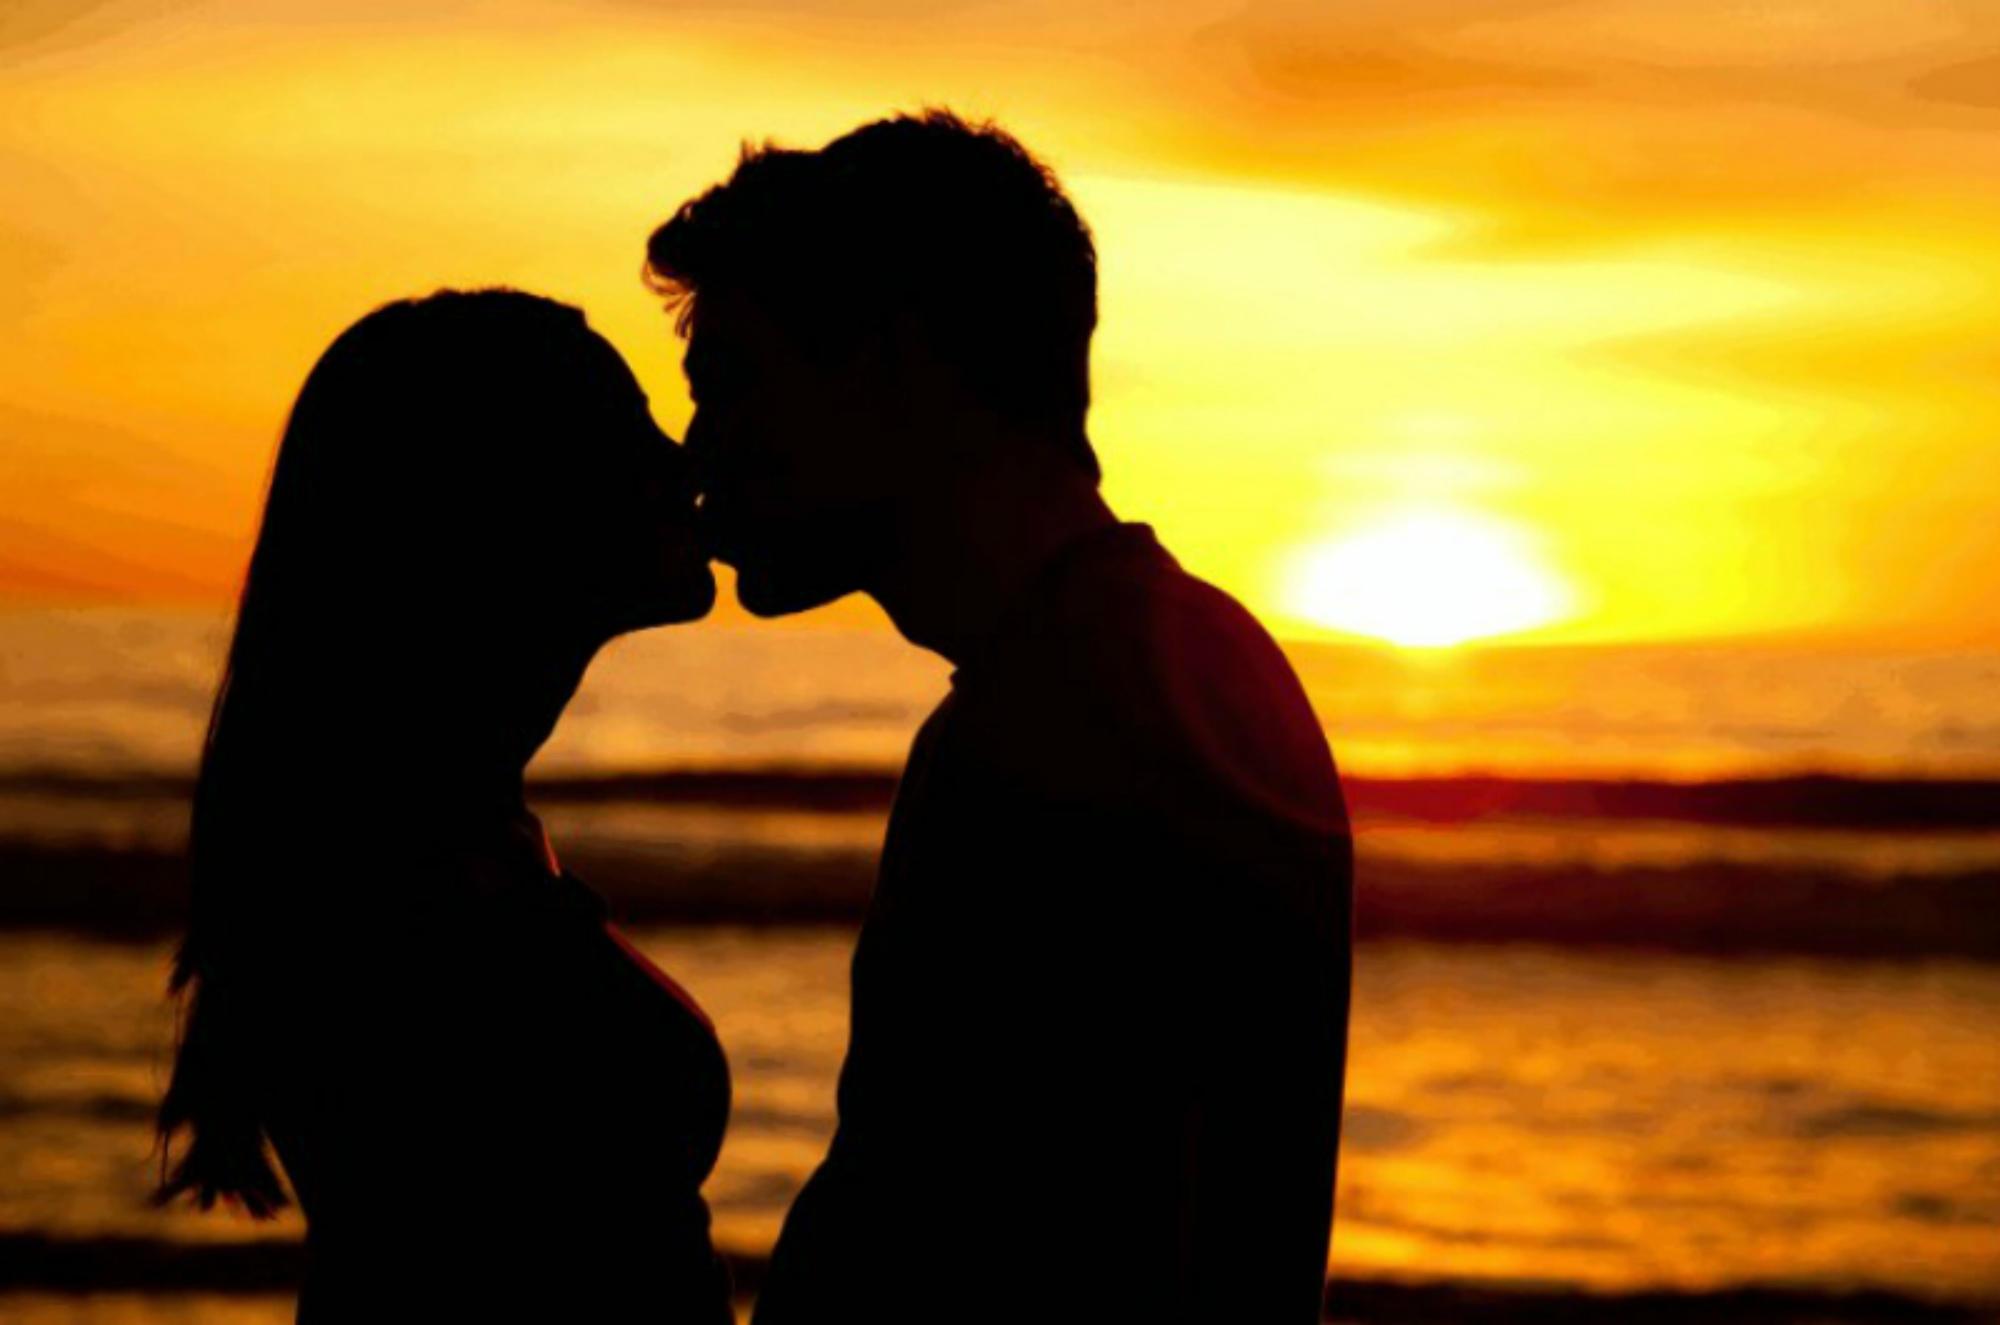 Двое. Поцелуй на закате. Любовь на закате. Парень целует девушку на закате. Поцелуй влюбленных.